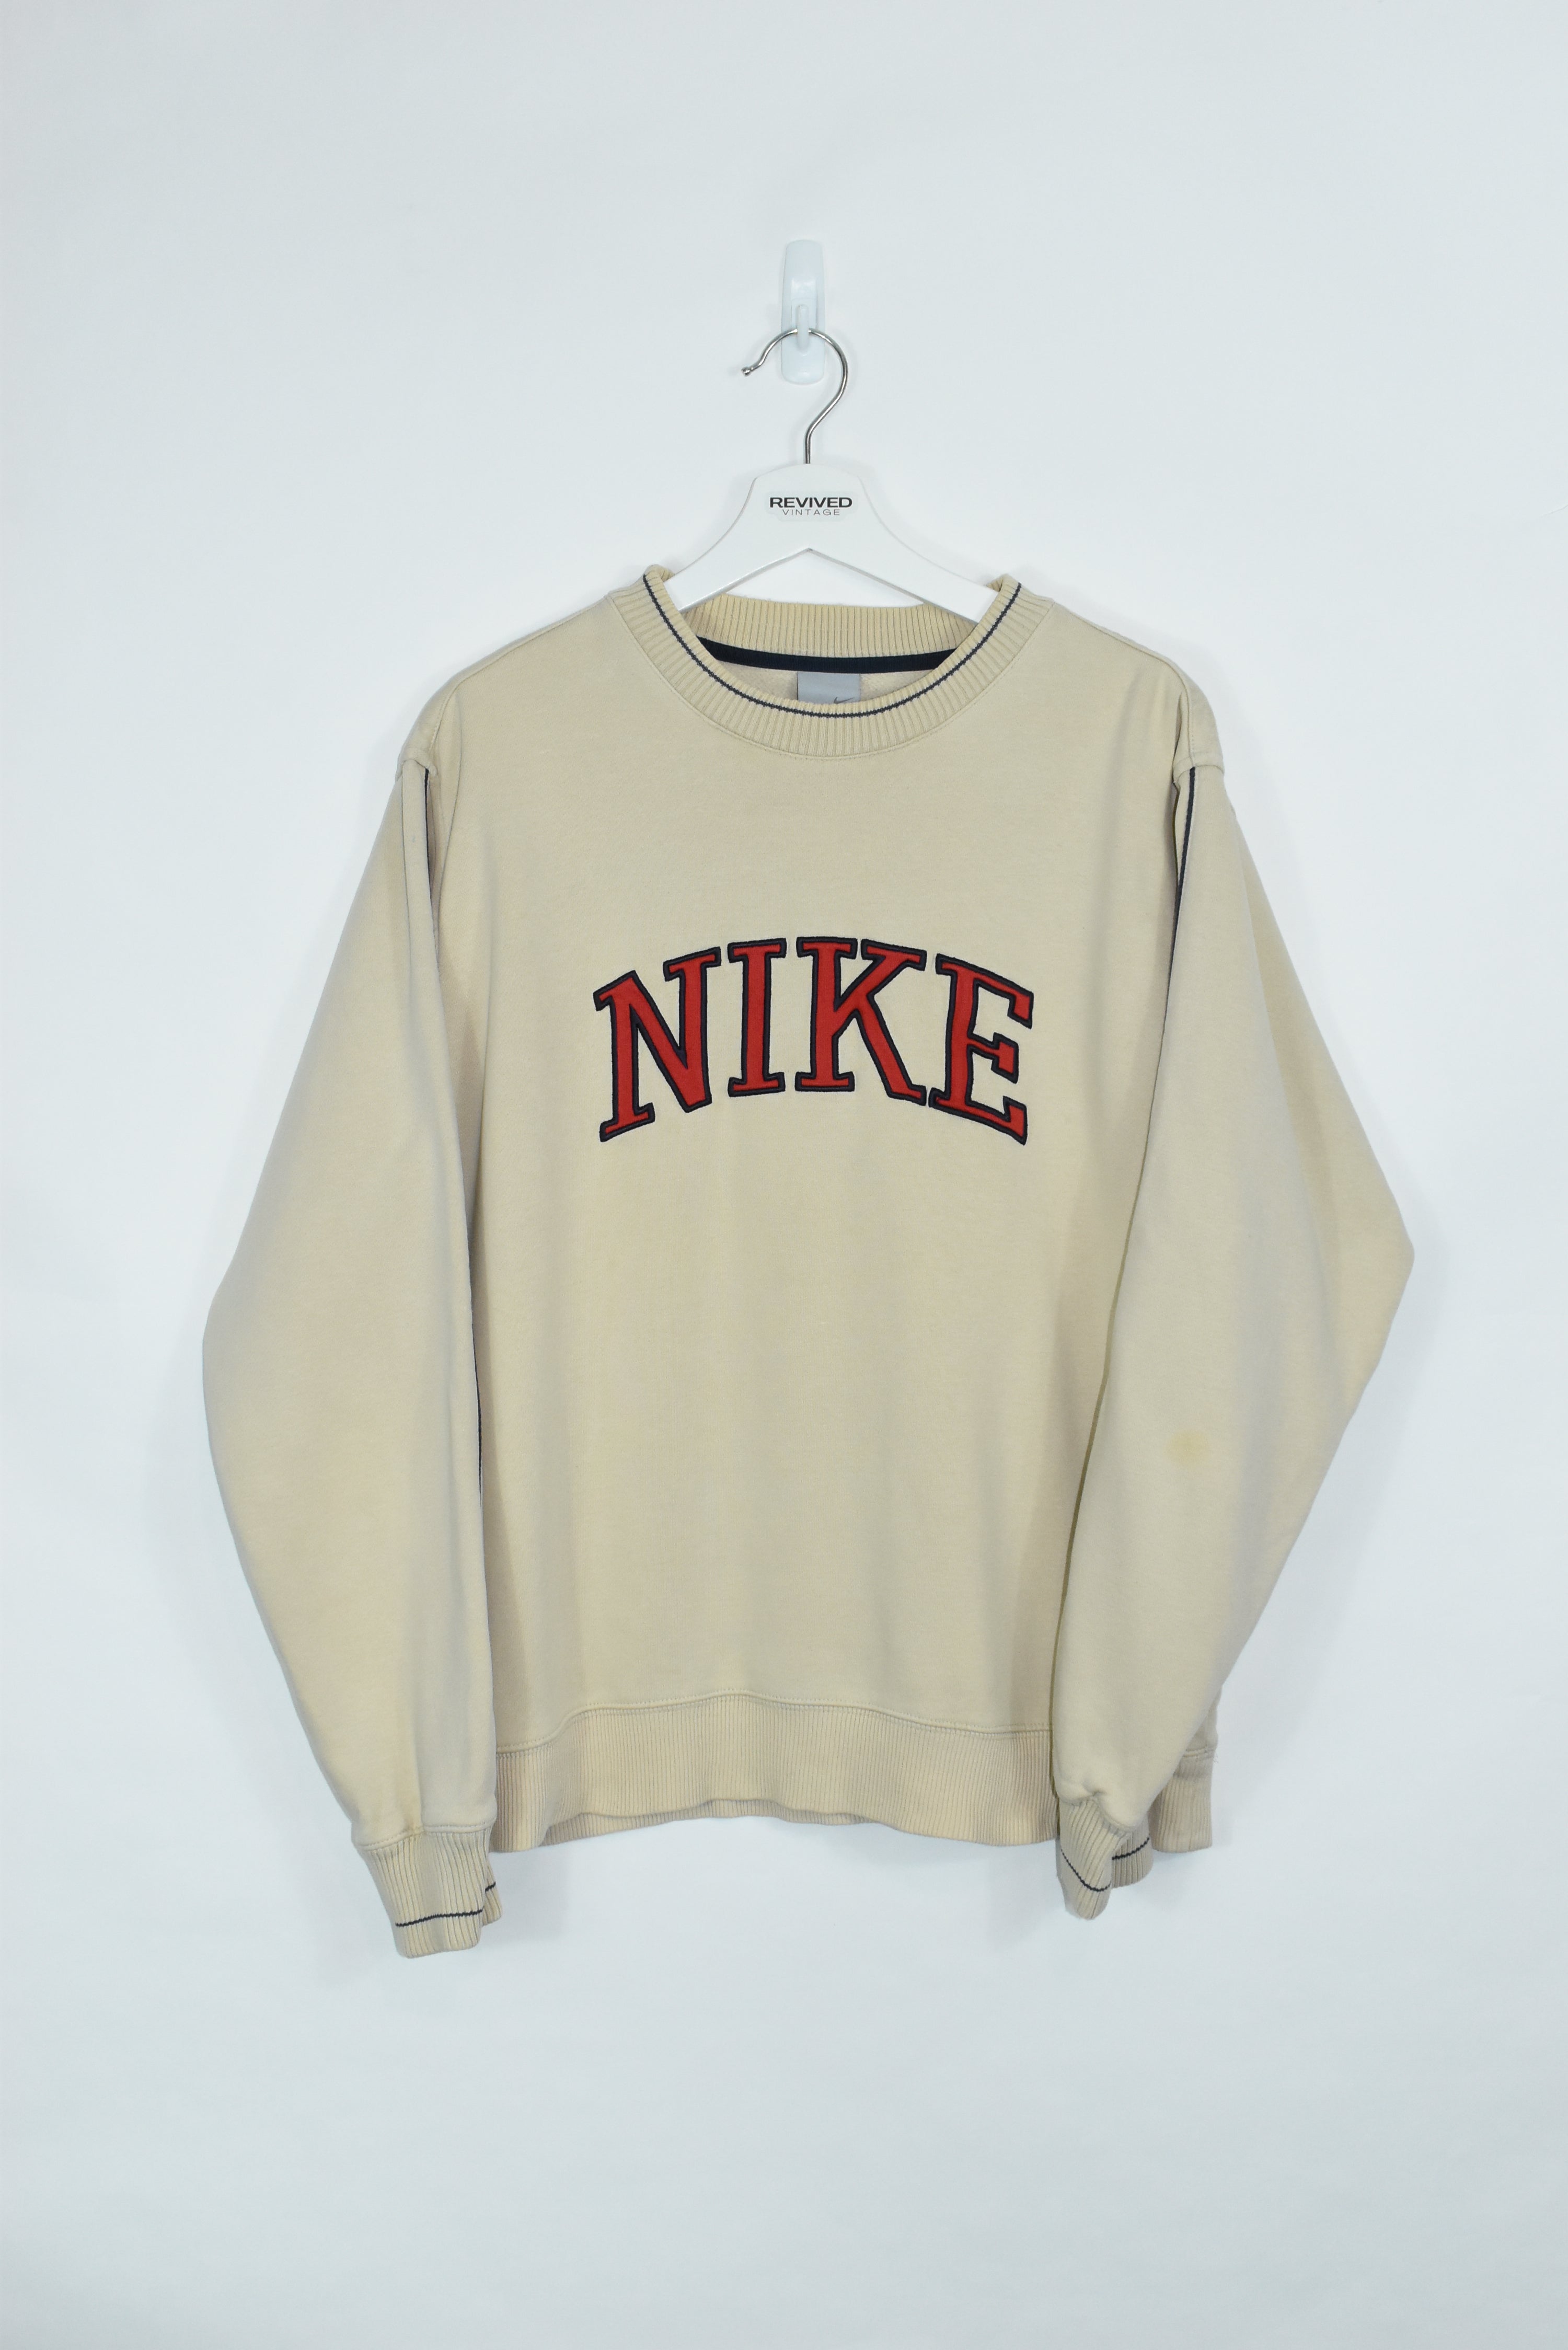 Vintage Nike Beige Embroidery Sweatshirt Medium